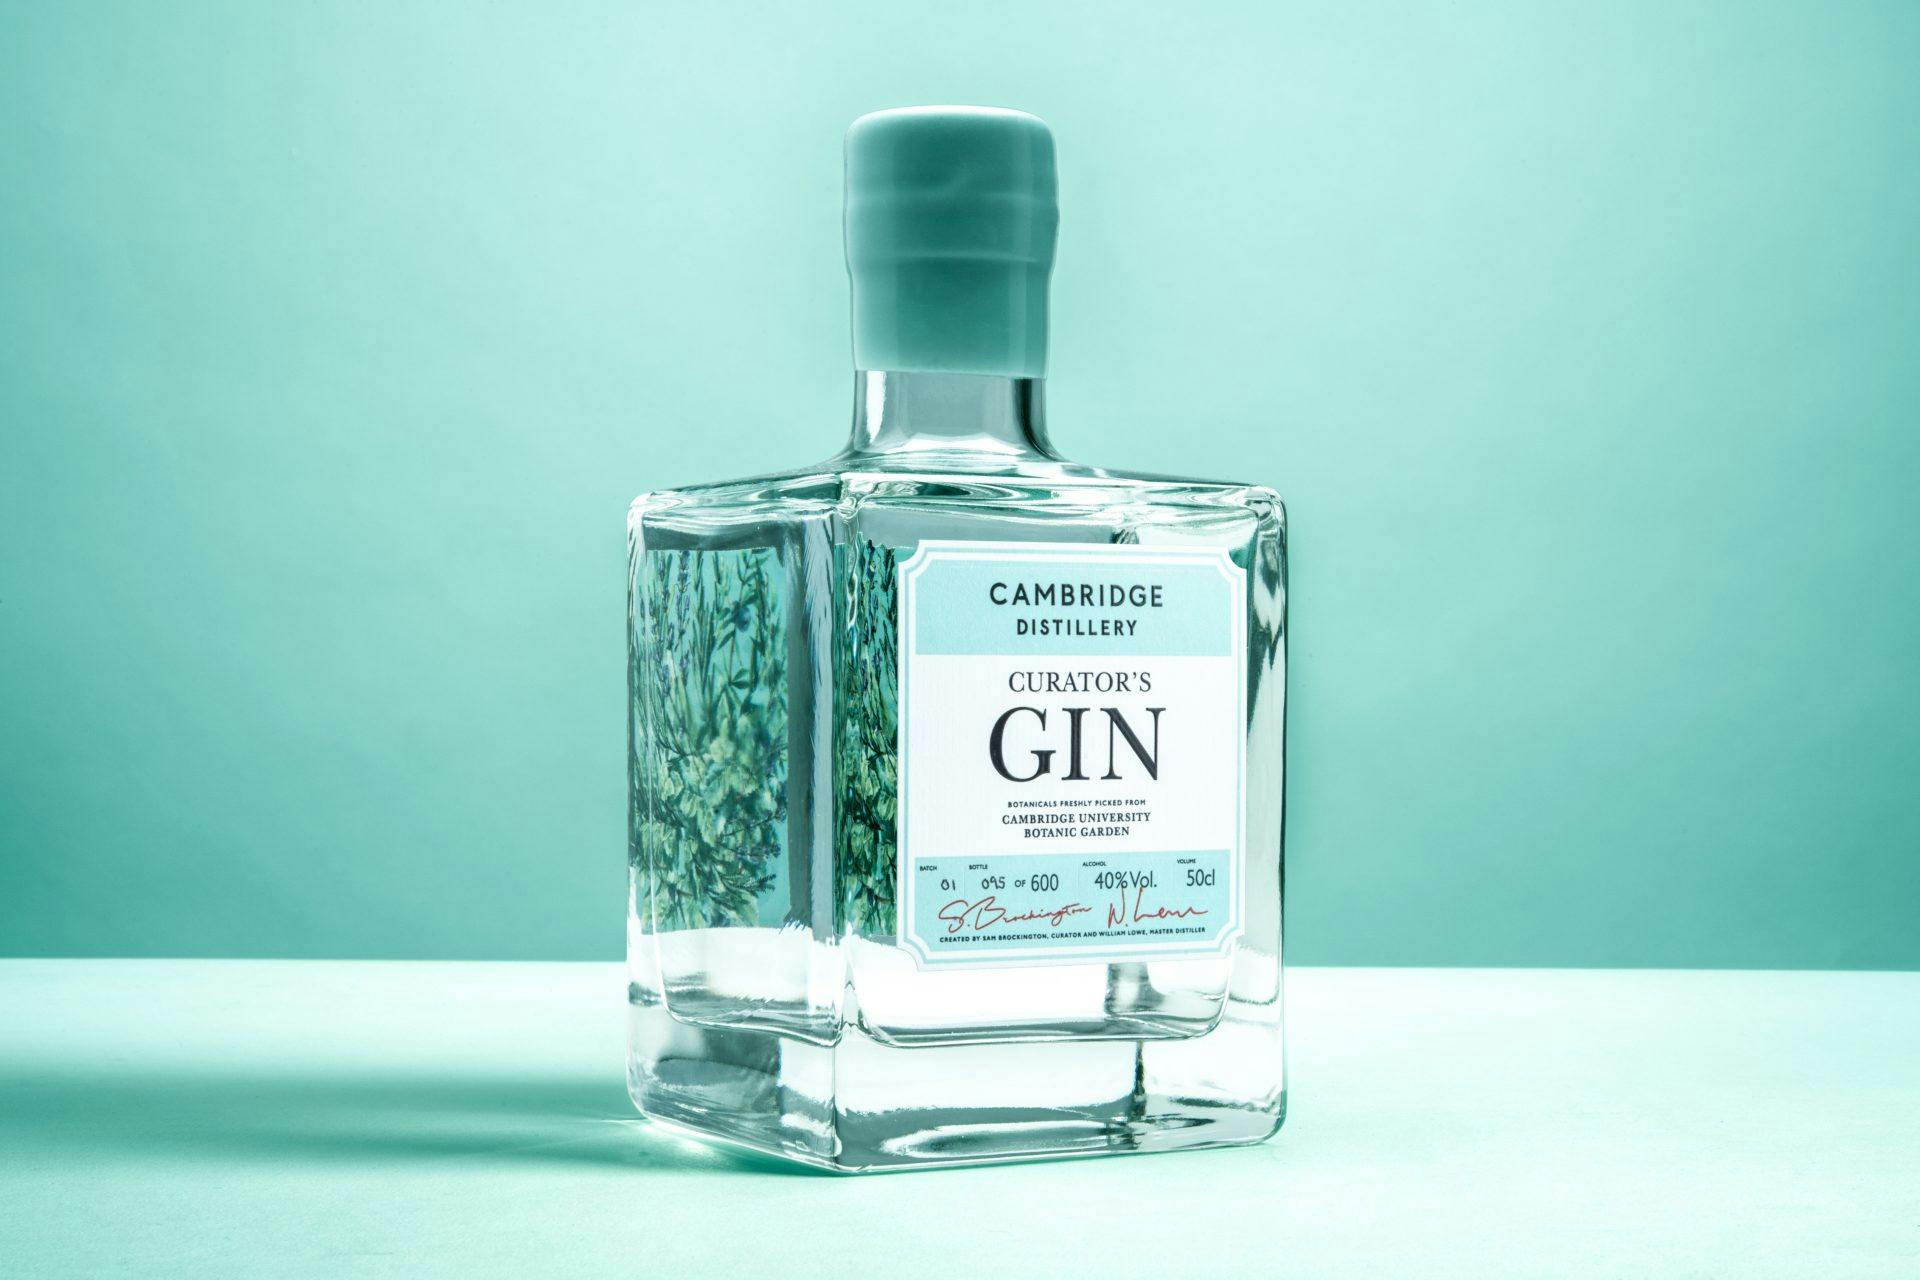 Image of Cambridge Distillery’s Curator’s Gin Label